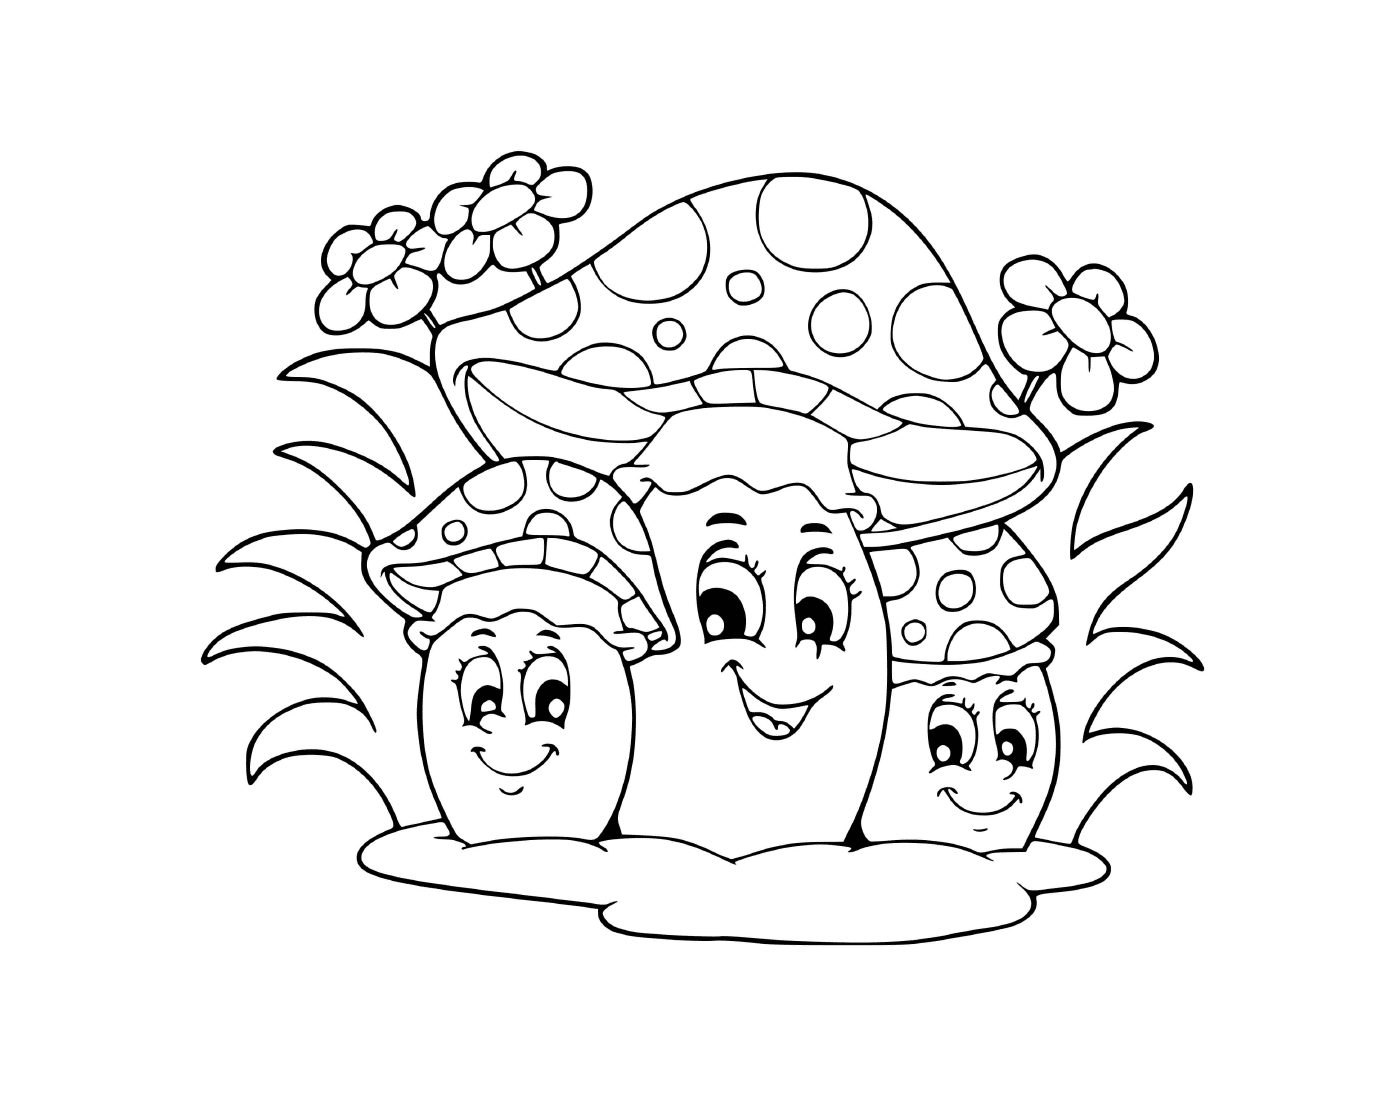  Três cogumelos 